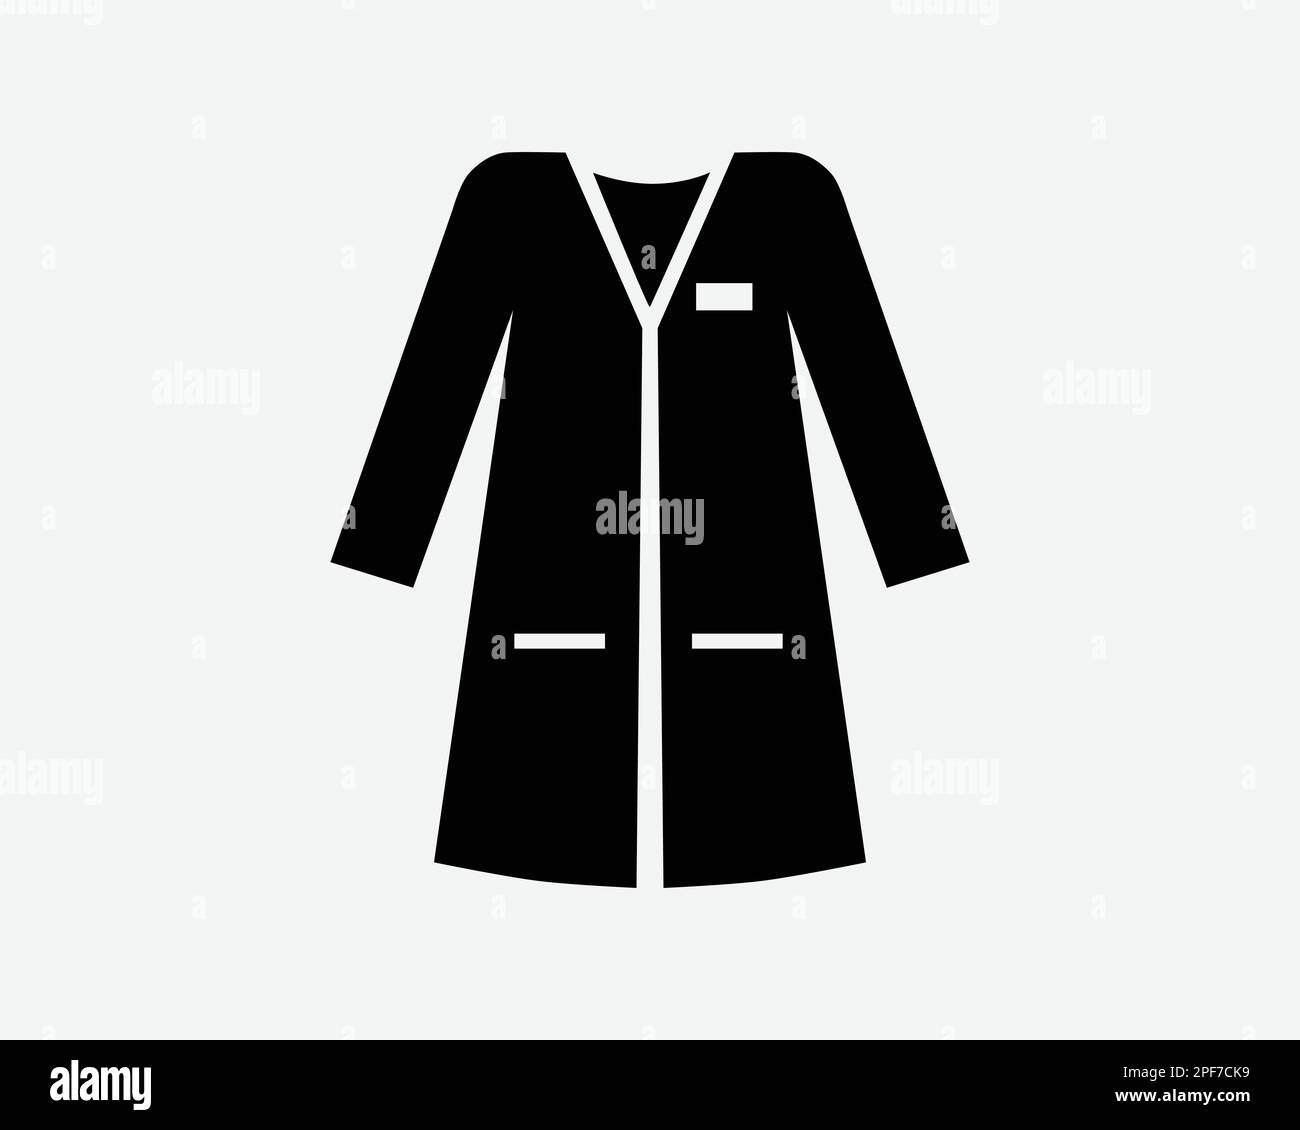 Lab Coat Laboratory Clothing Doctor Uniform Scientist Black White Silhouette Symbol Icon Sign Graphic Clipart Artwork Illustration Pictogram Vector Stock Vector